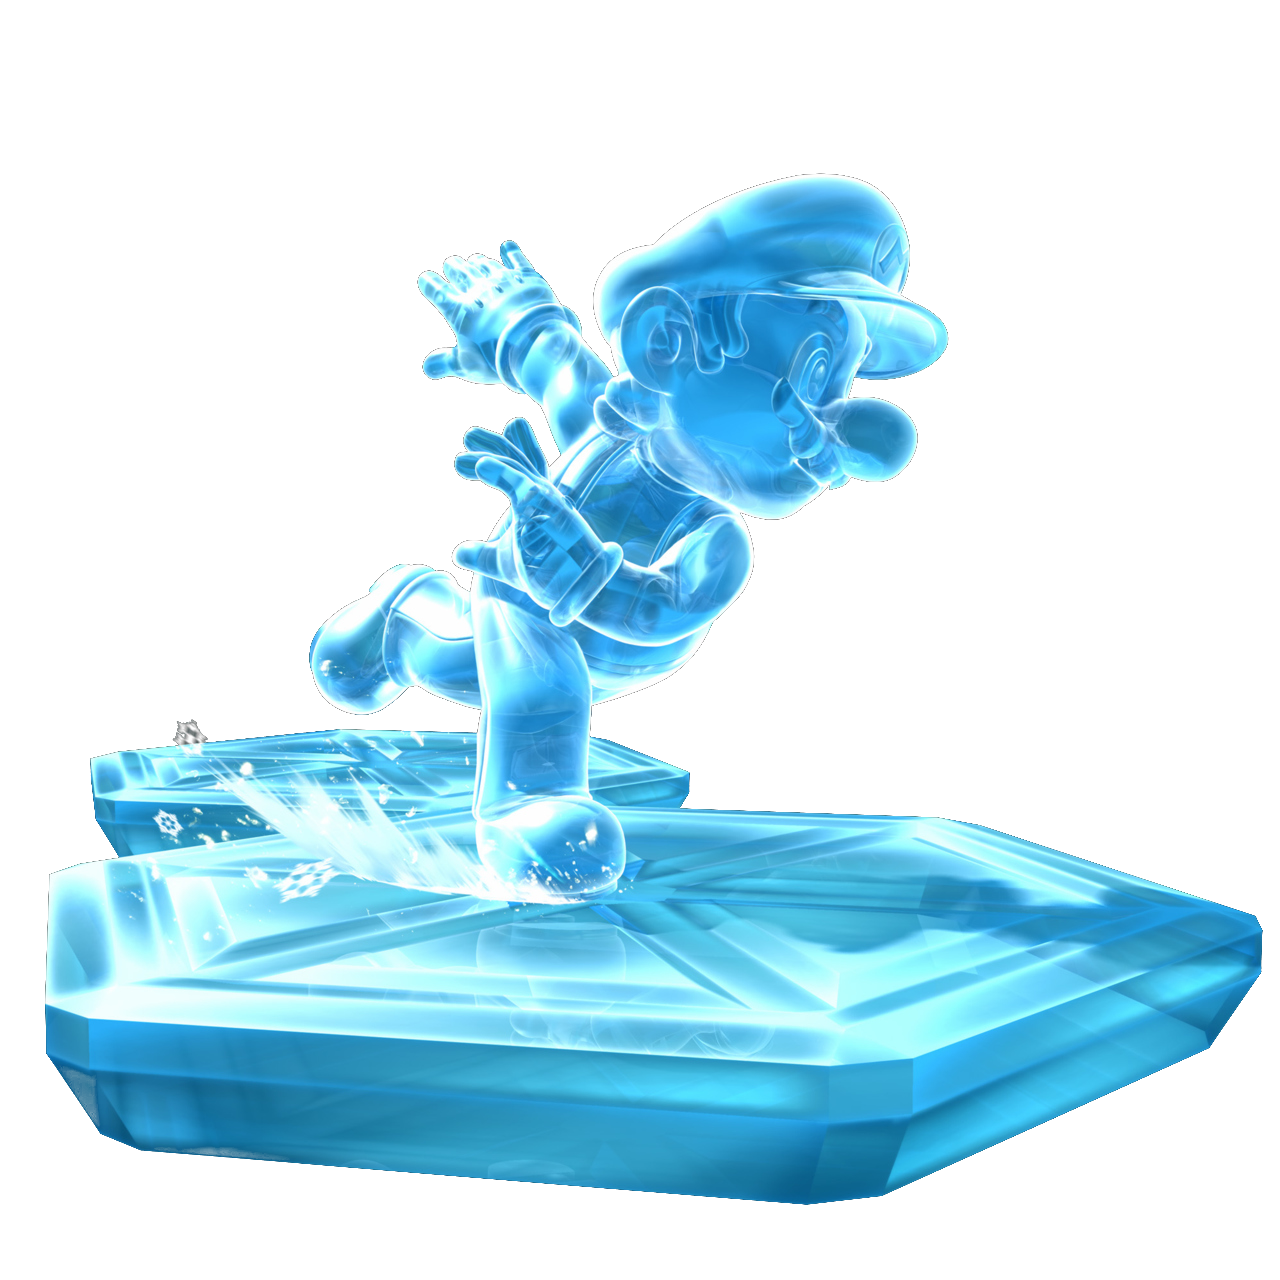 Frost Tour - Super Mario Wiki, the Mario encyclopedia